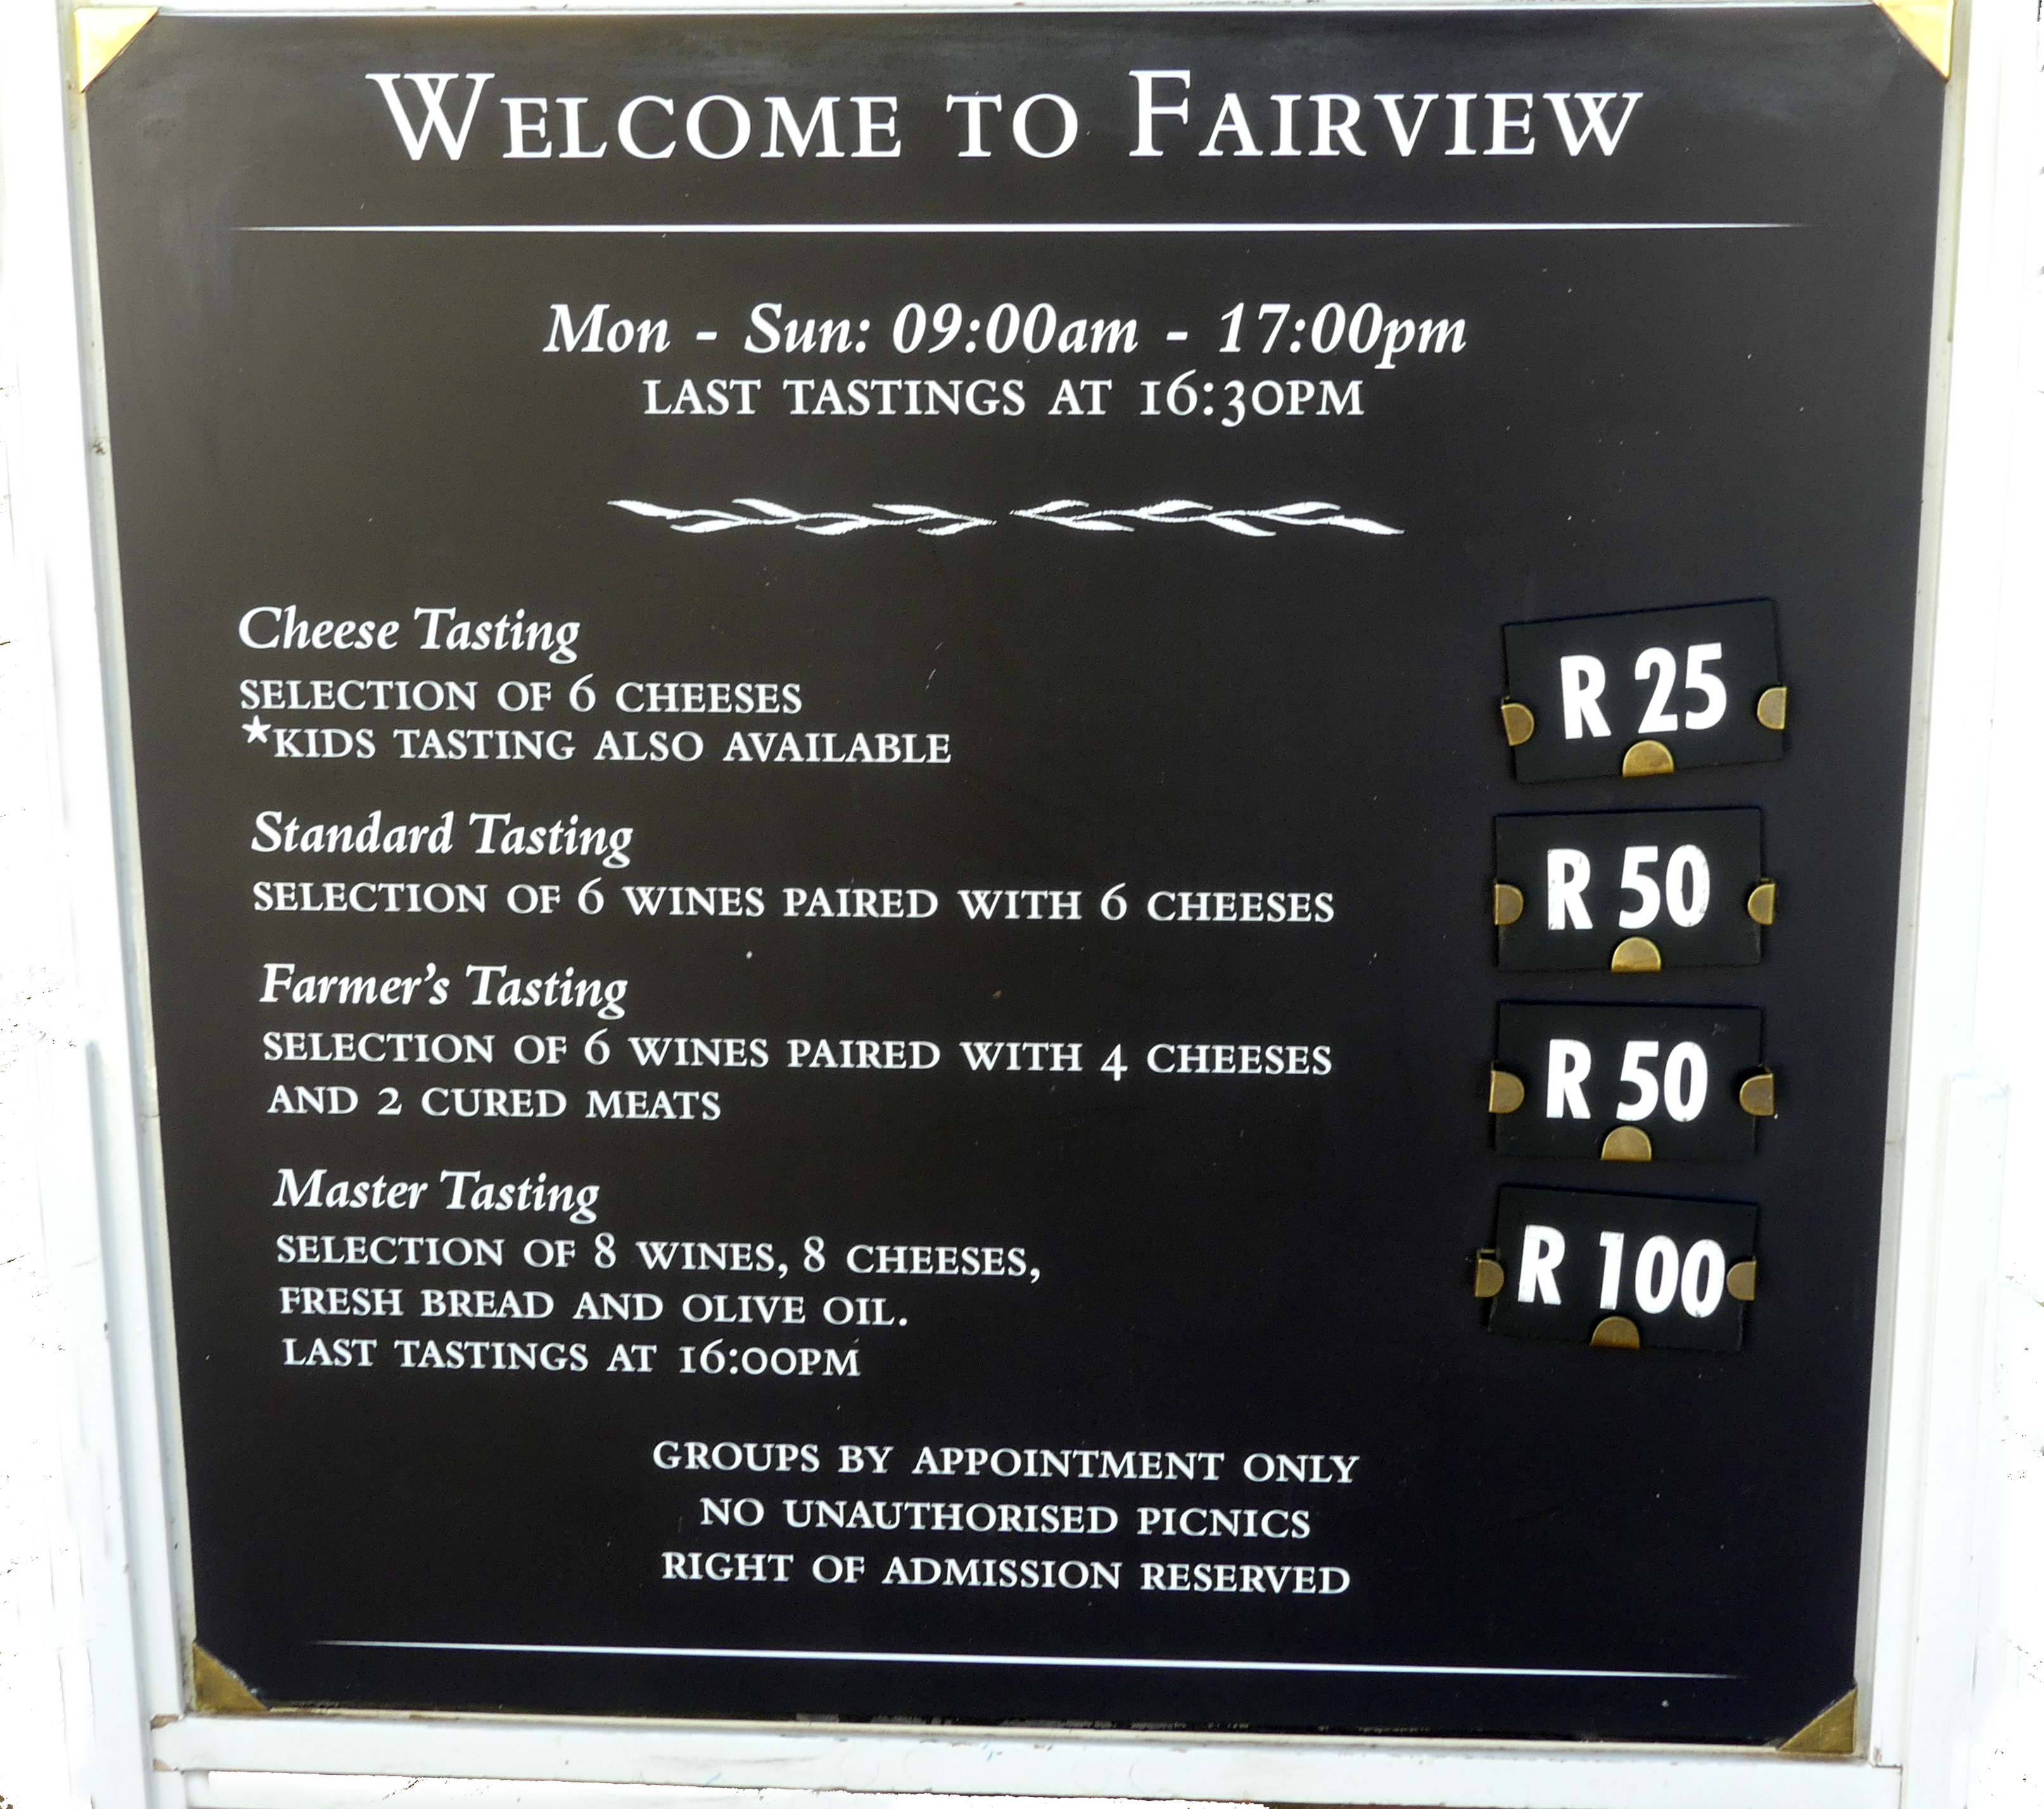 Fairview prices